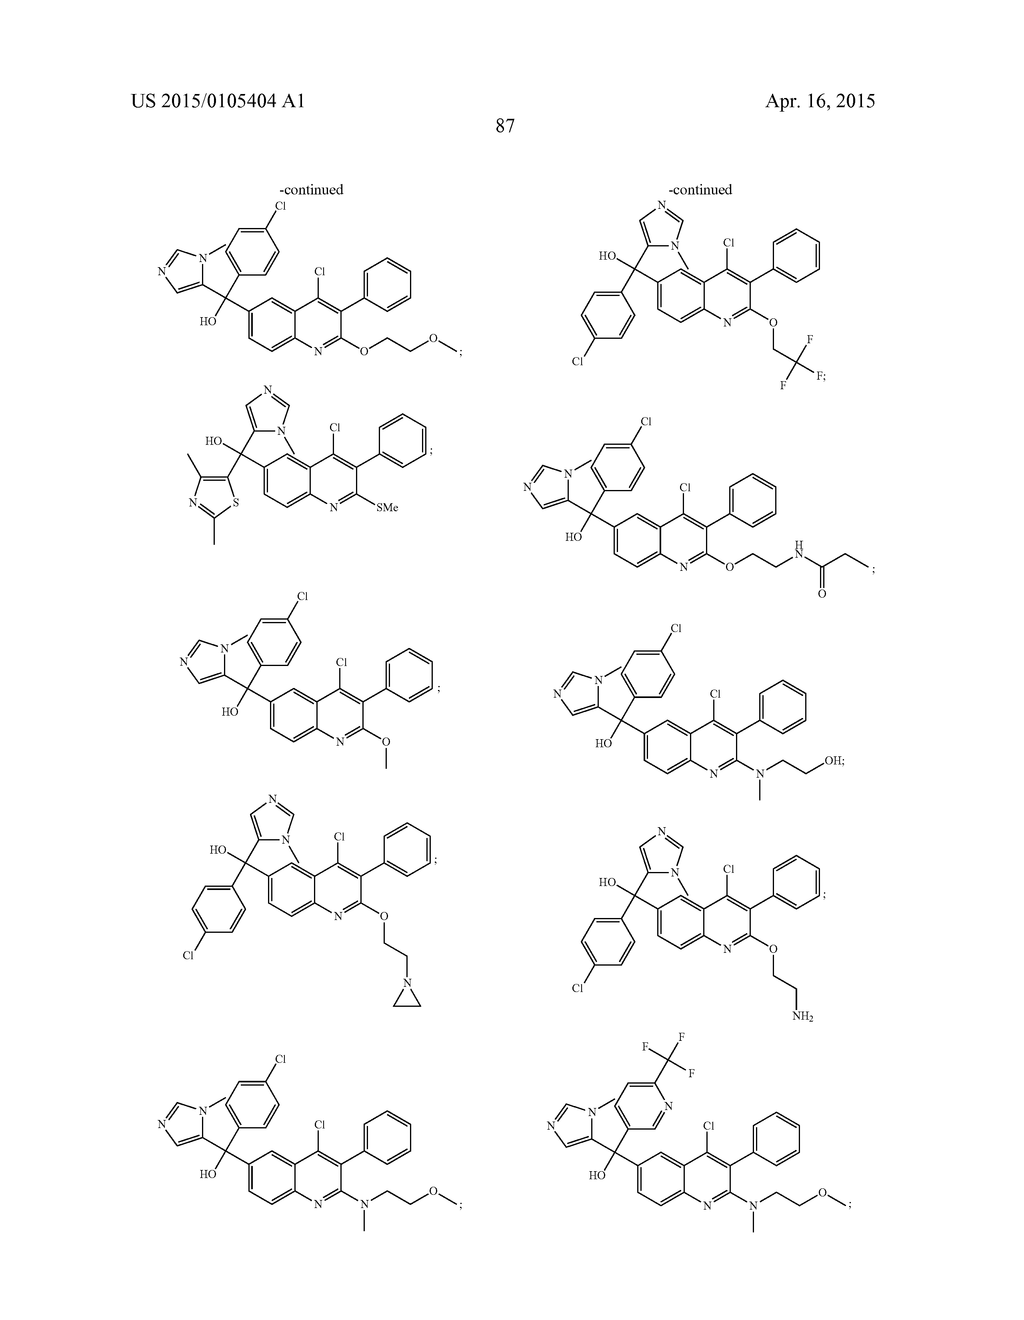 PHENYL LINKED QUINOLINYL MODULATORS OF RORyt - diagram, schematic, and image 88